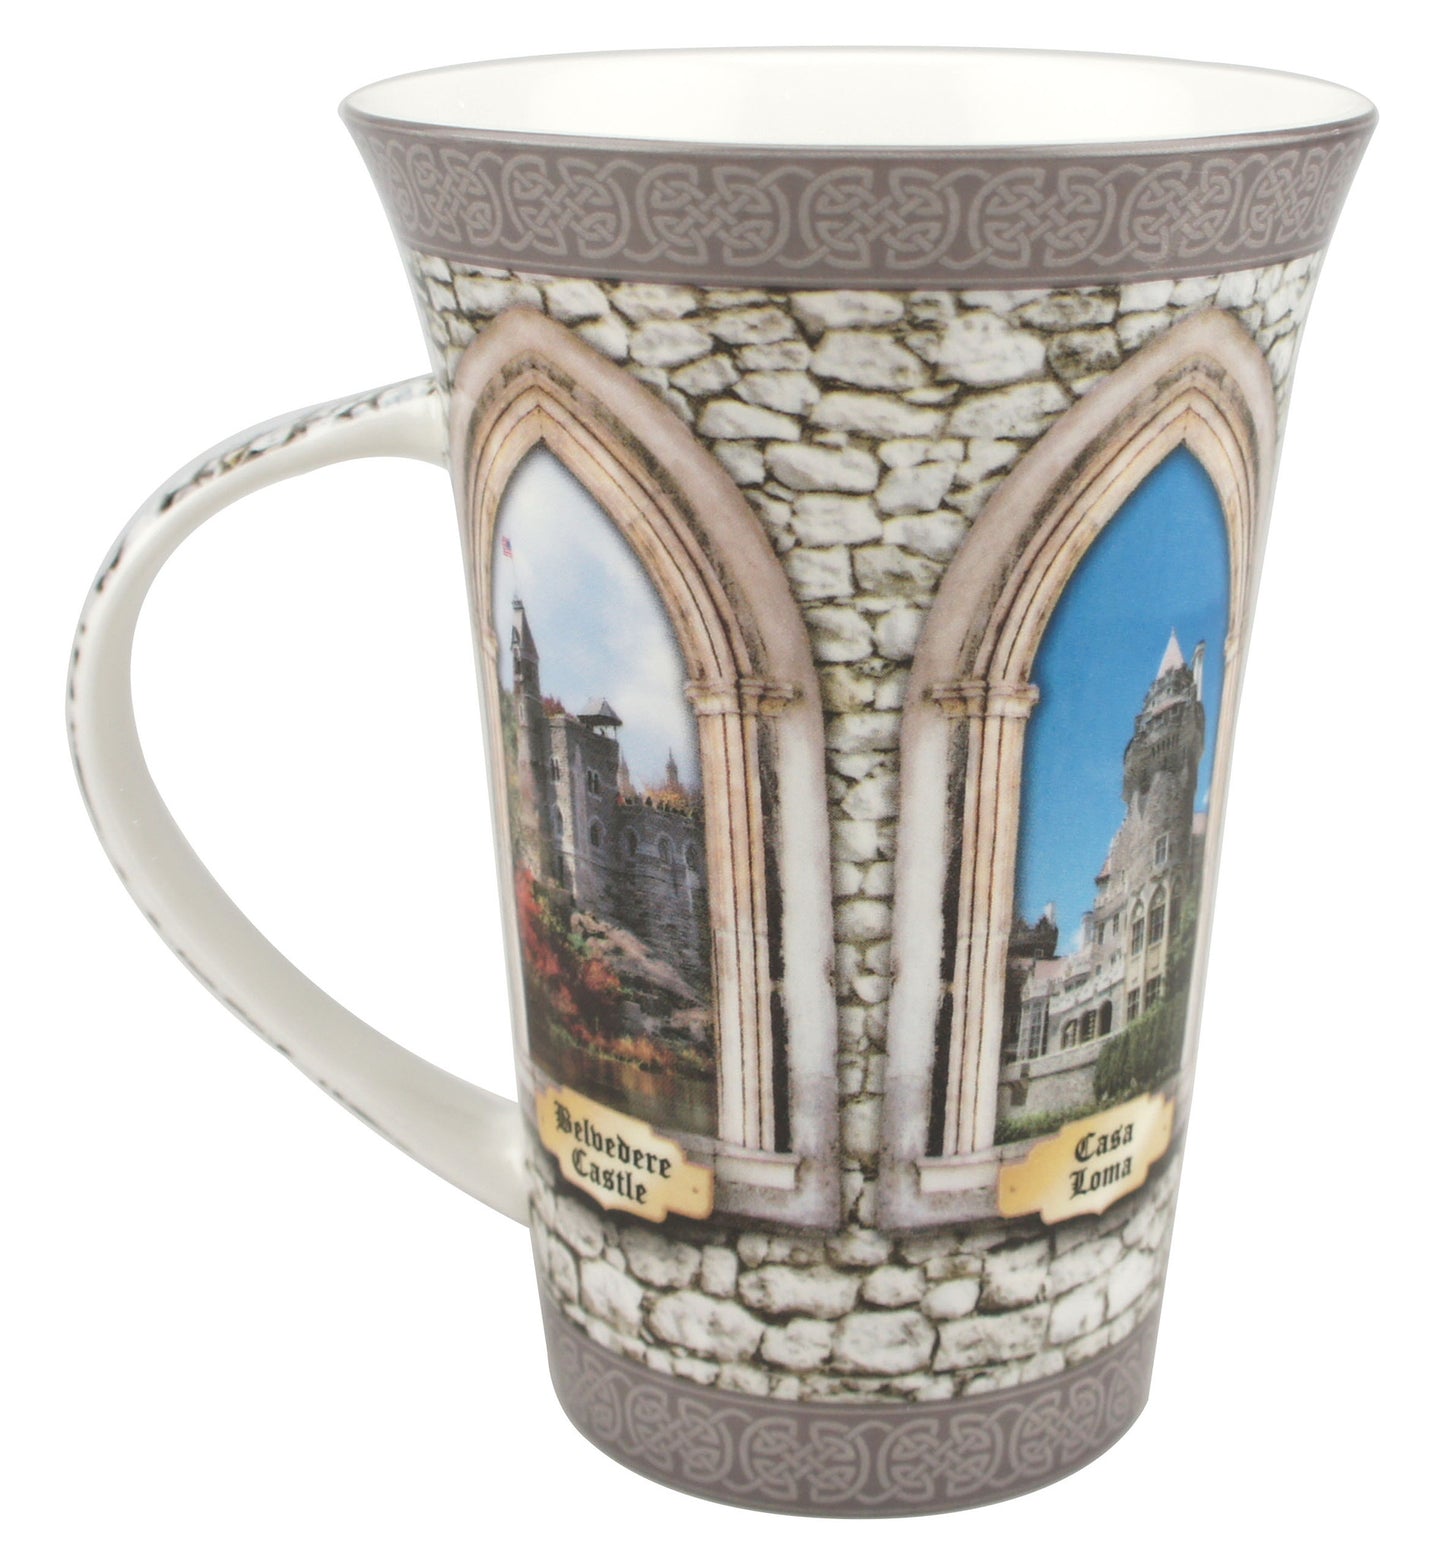 'North American Castles' i-Mug $10.95